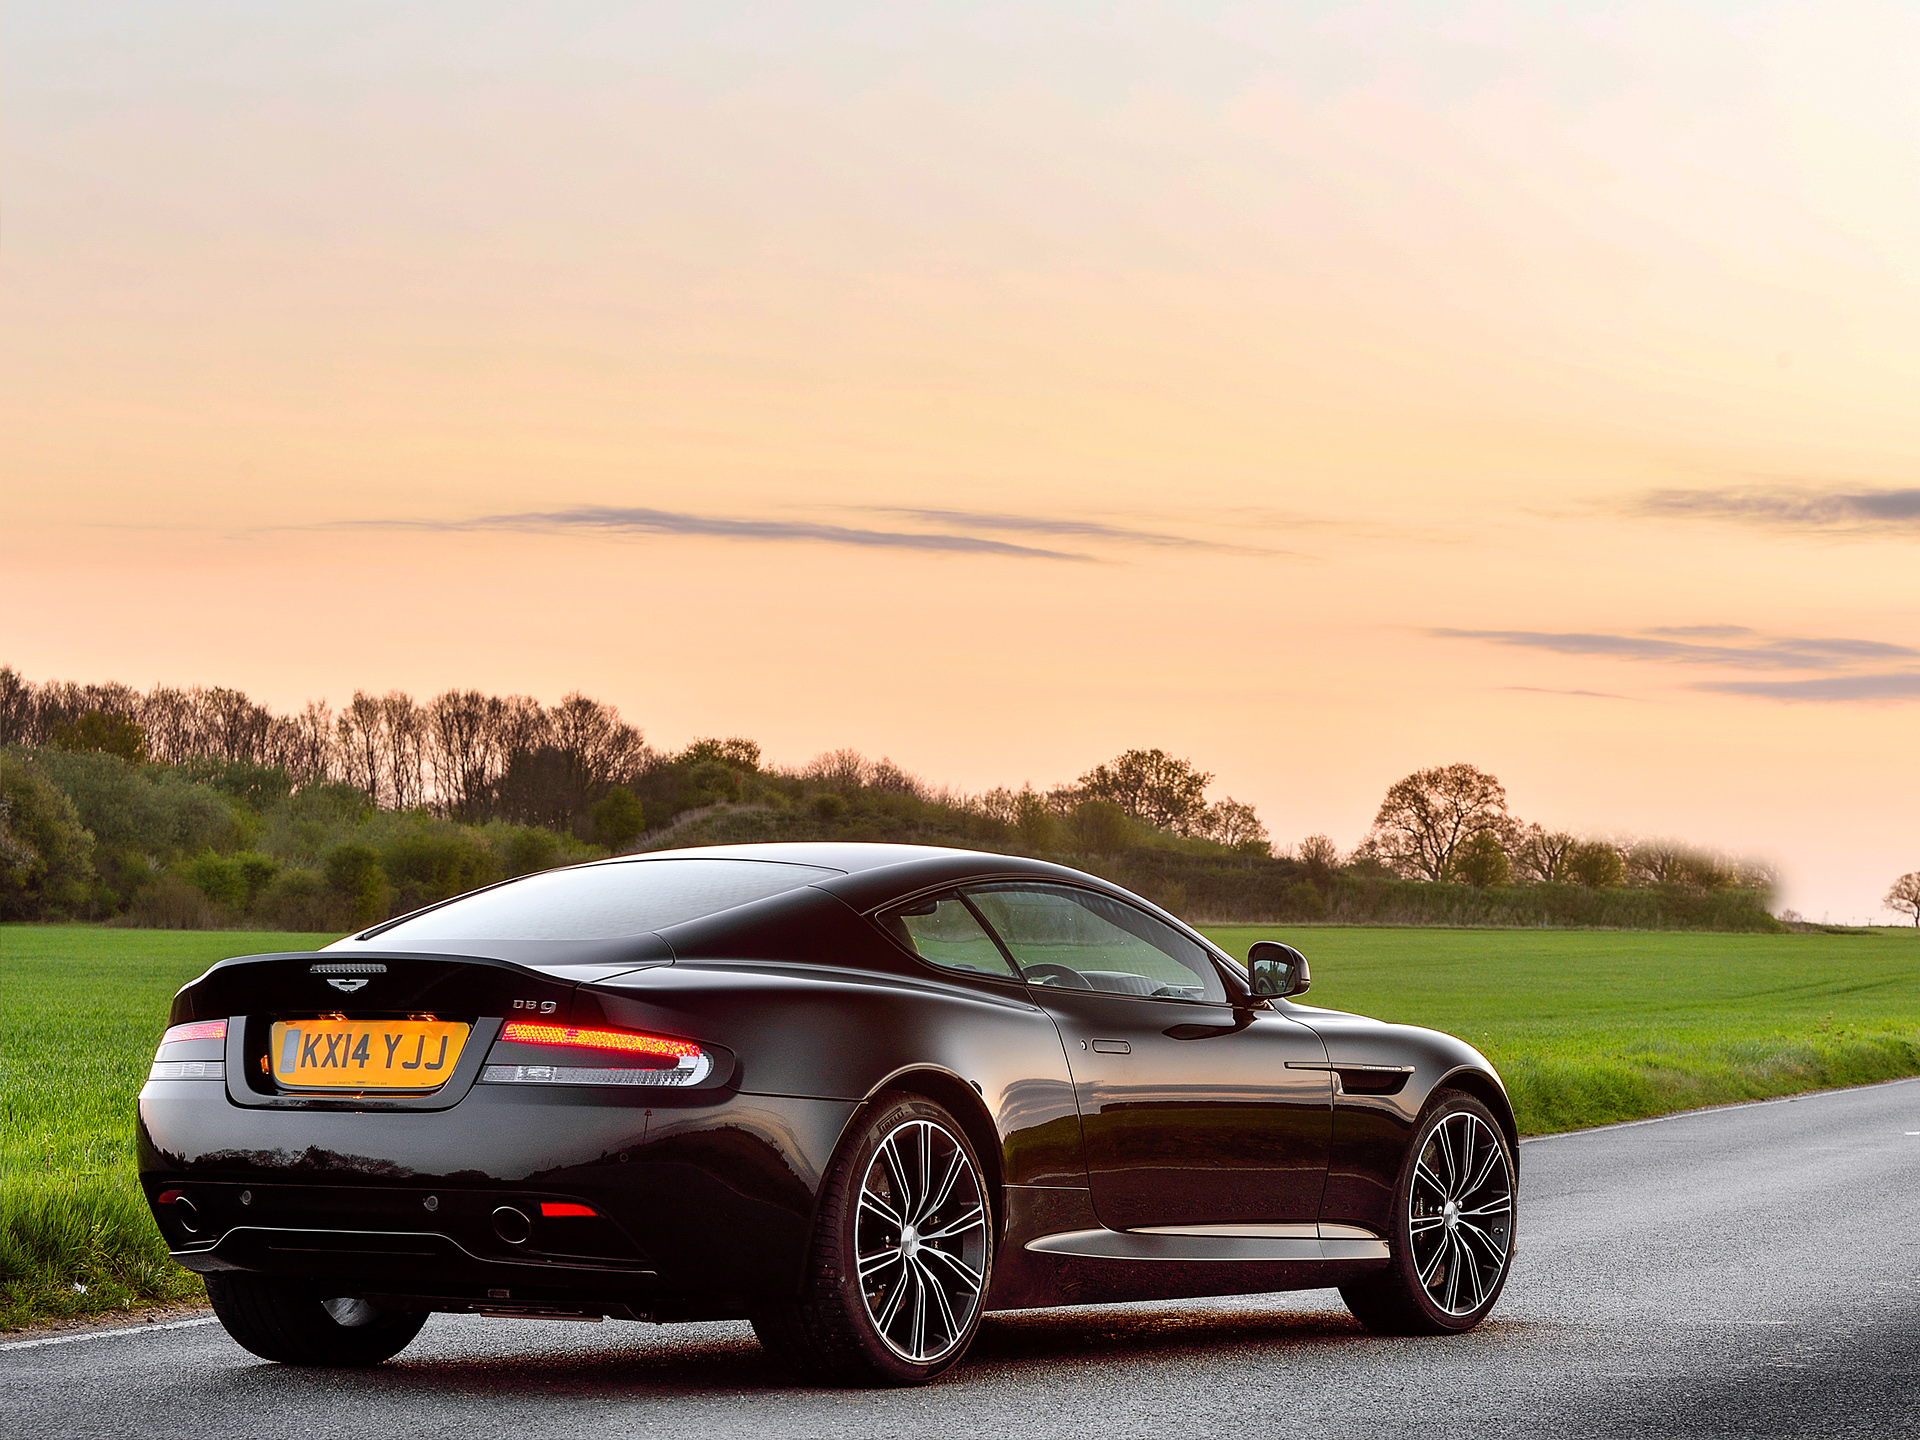  2015 Aston Martin DB9 Carbon Edition Wallpaper.